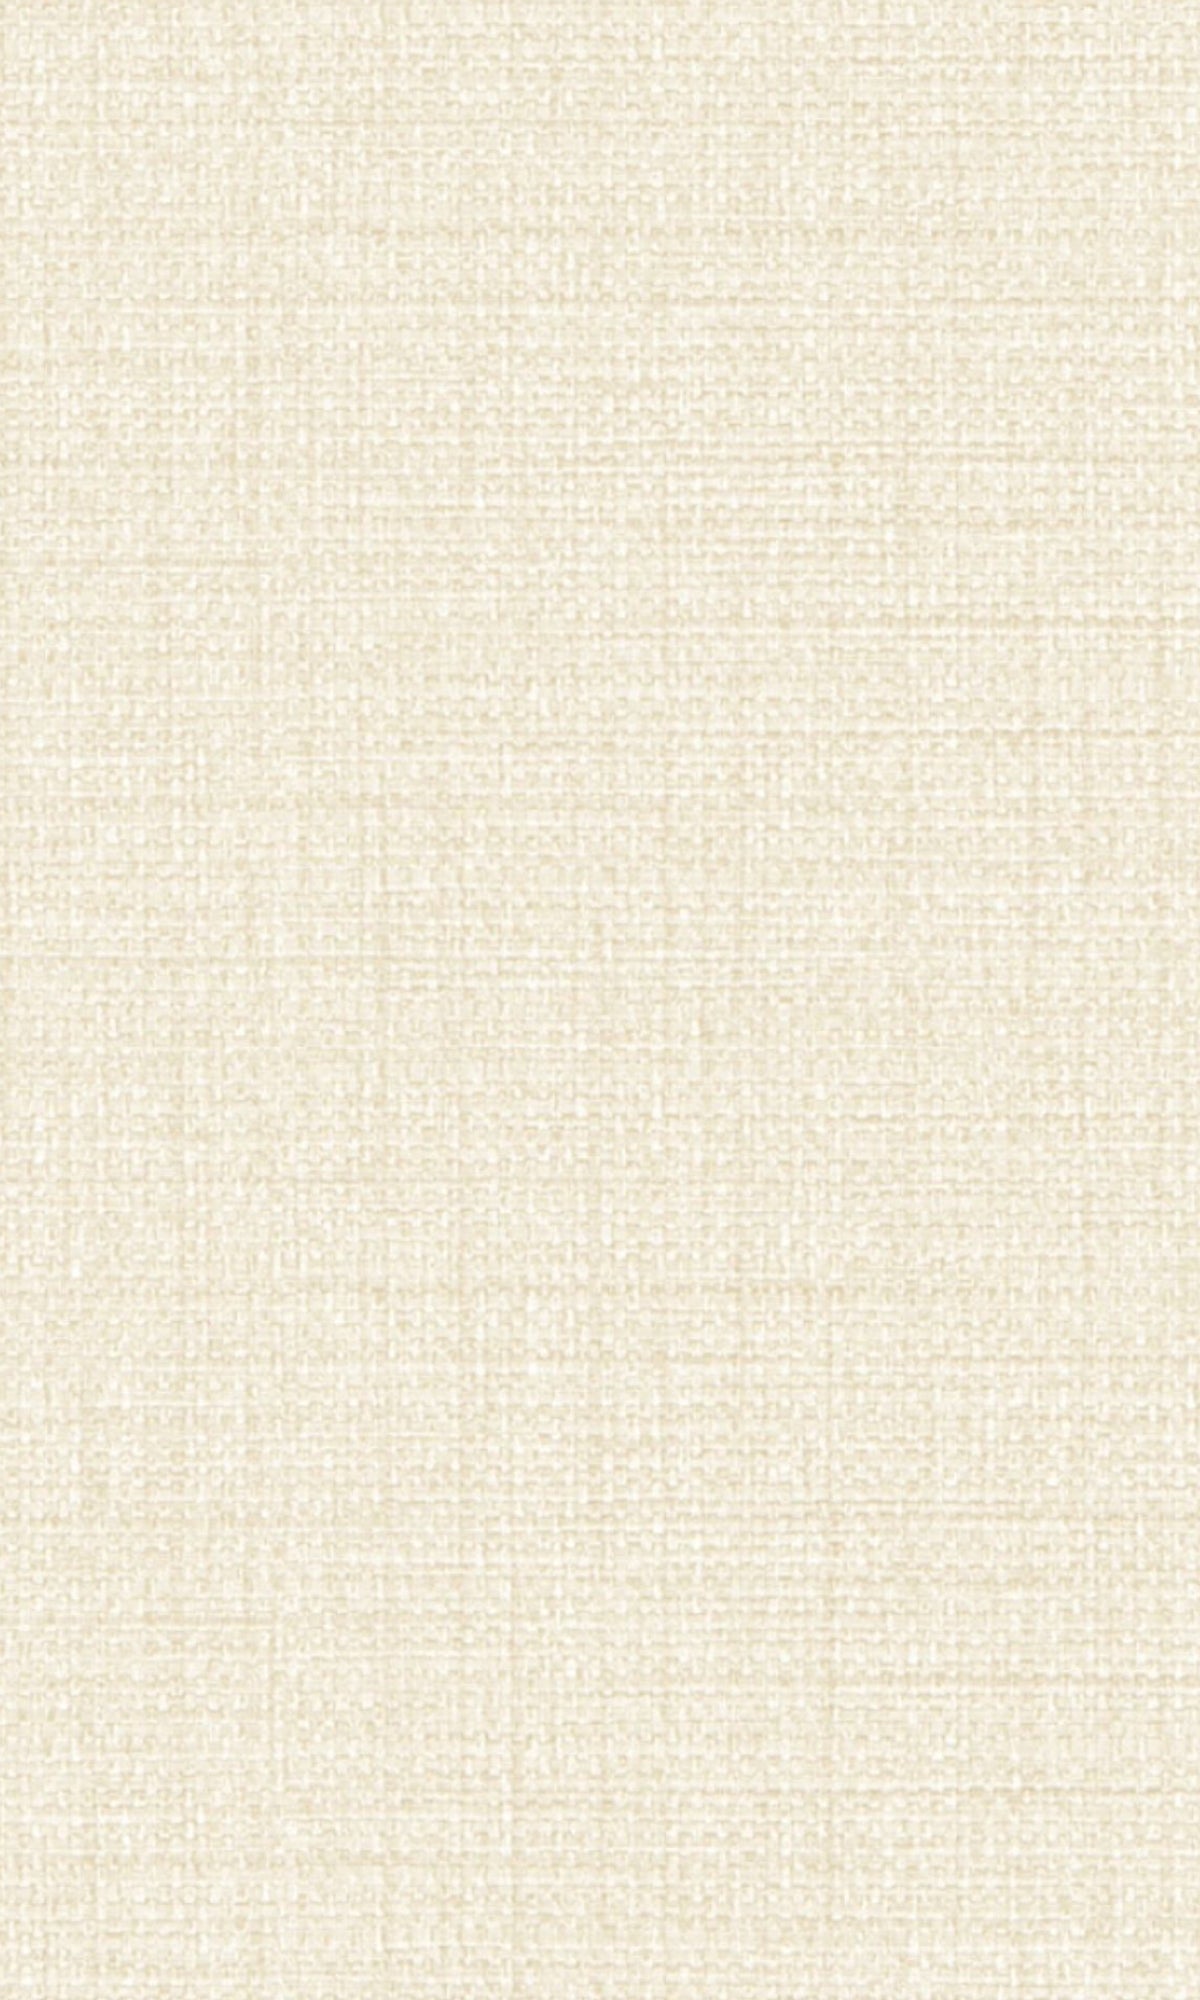 Softly Lit Linen Textured Vinyl Wallpaper C7608